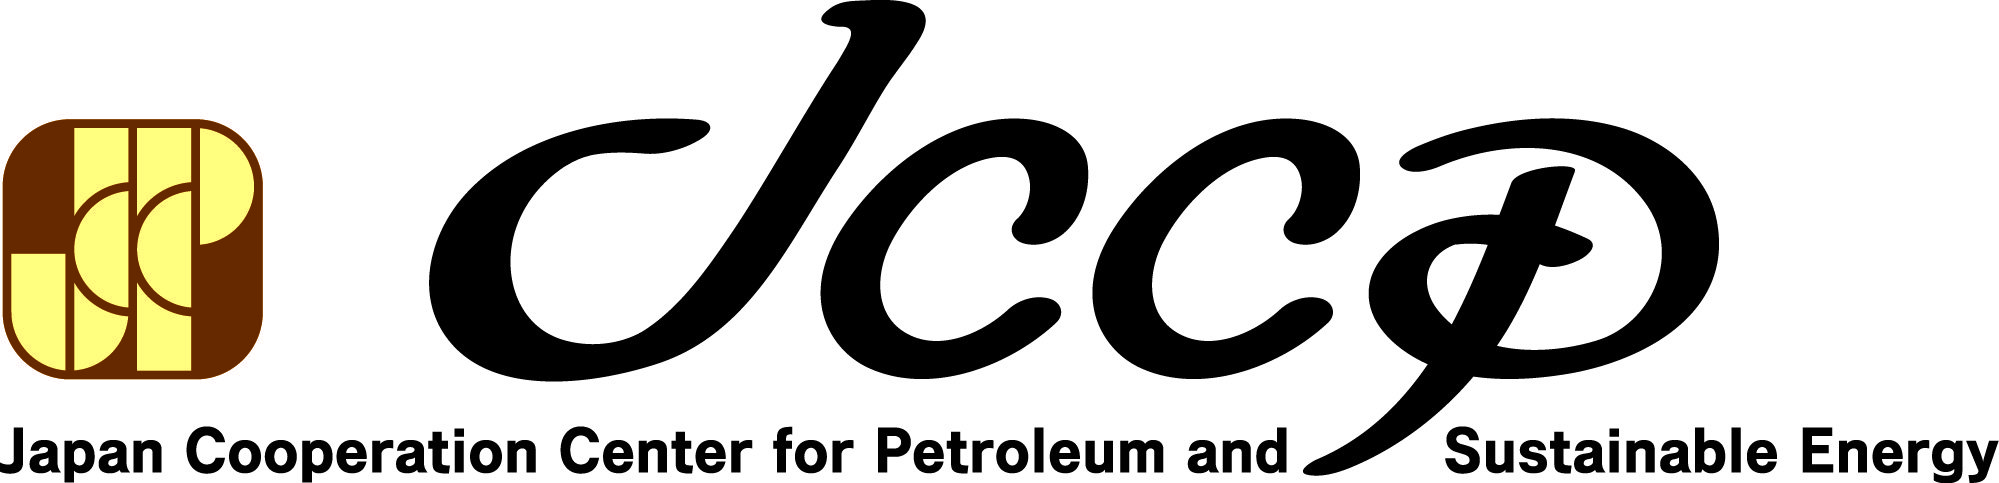 JCCP:Japan Cooperation Center, Petroleum